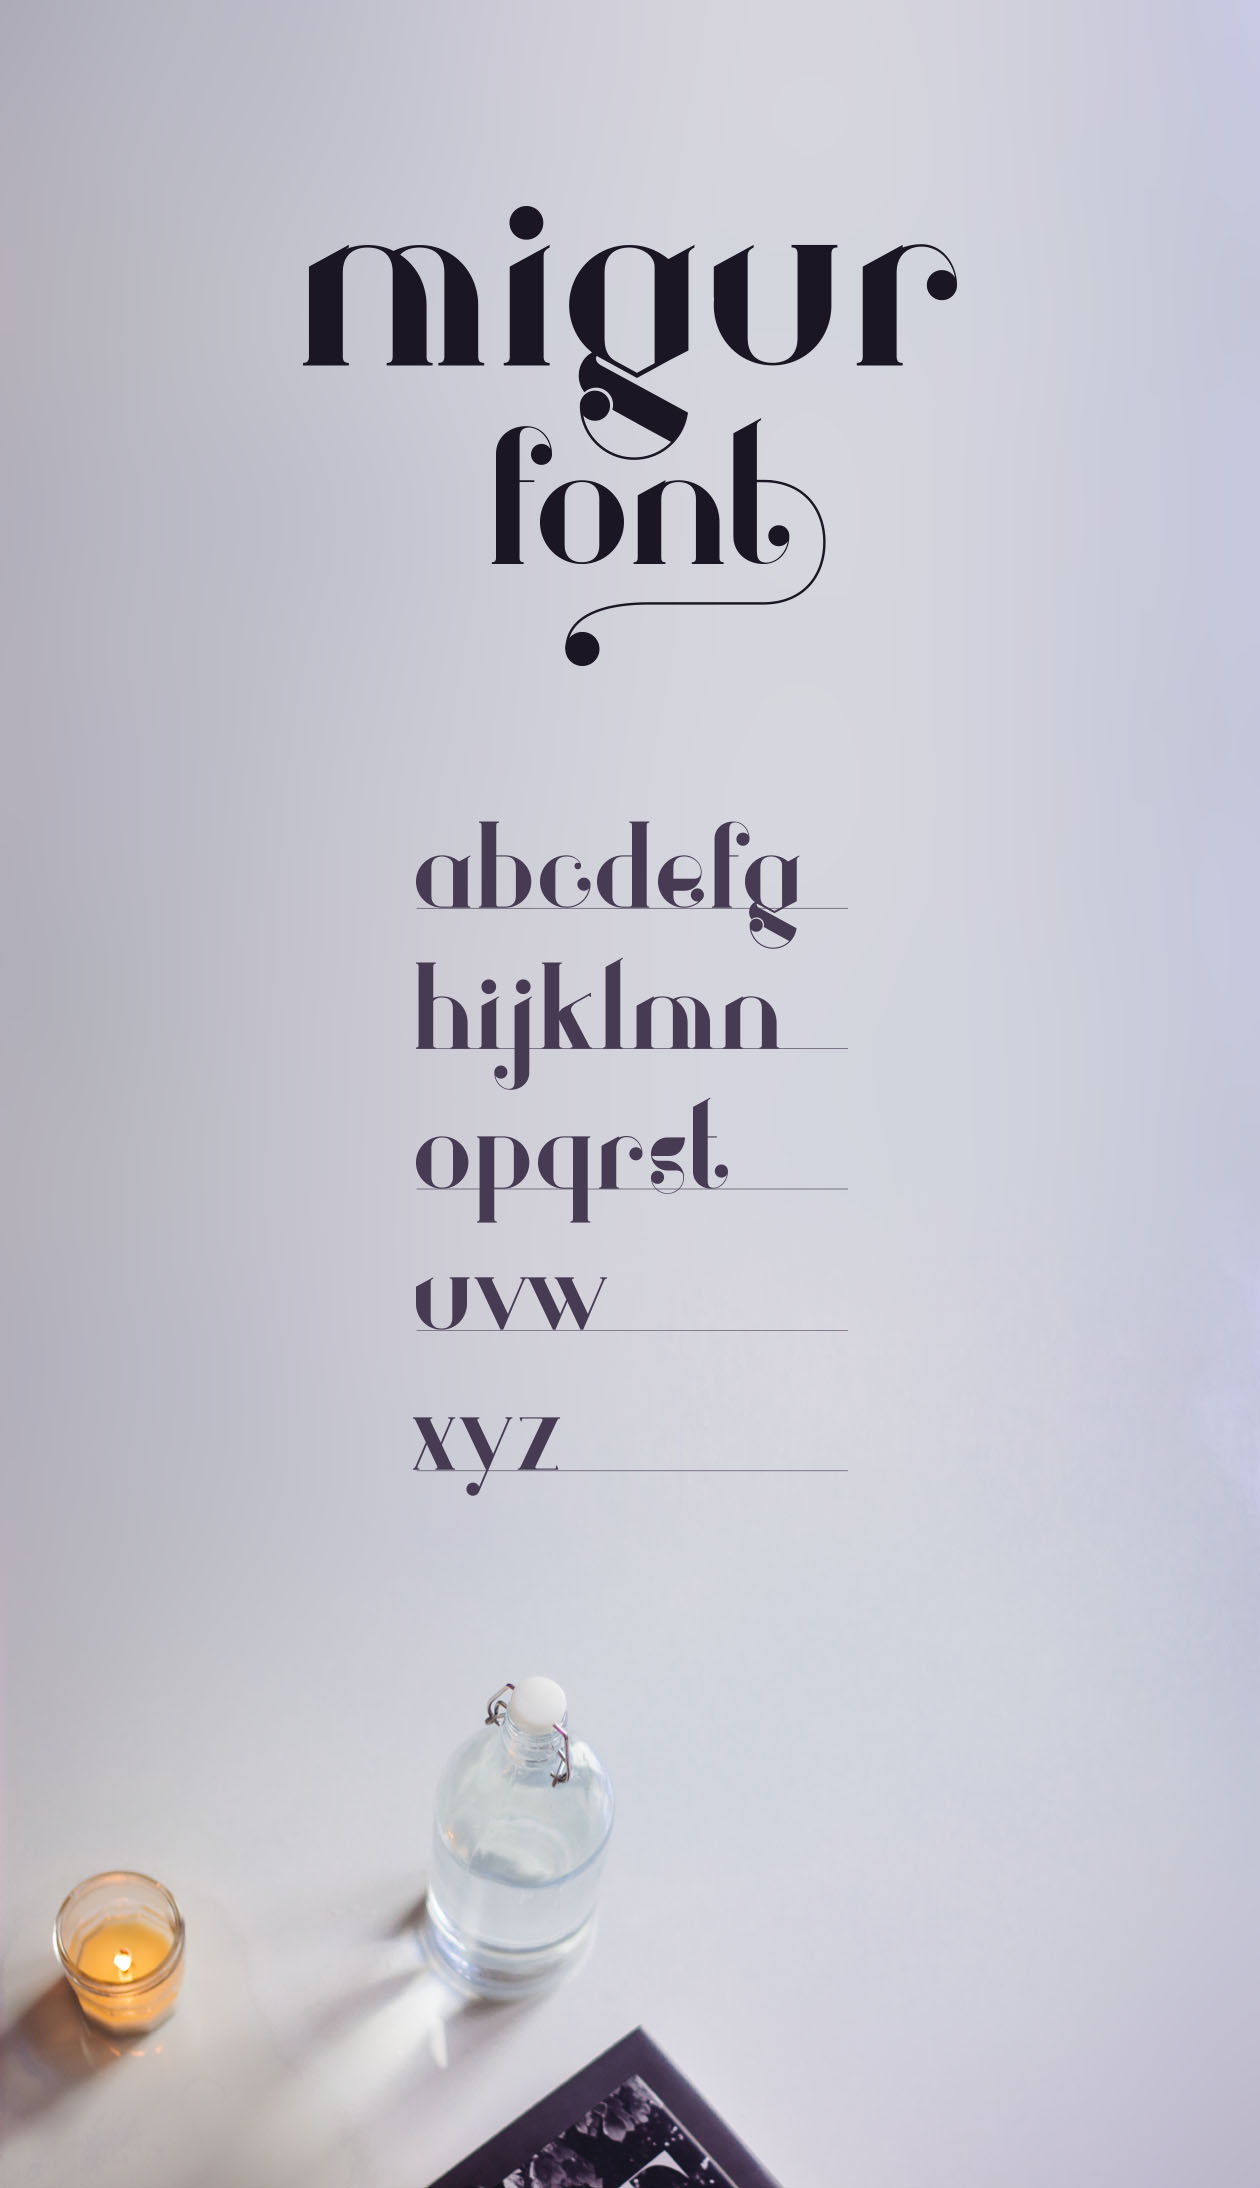 Behance网站推荐最佳英文排版印刷字体非凡图库精选之一 Migur Serif Font插图(1)